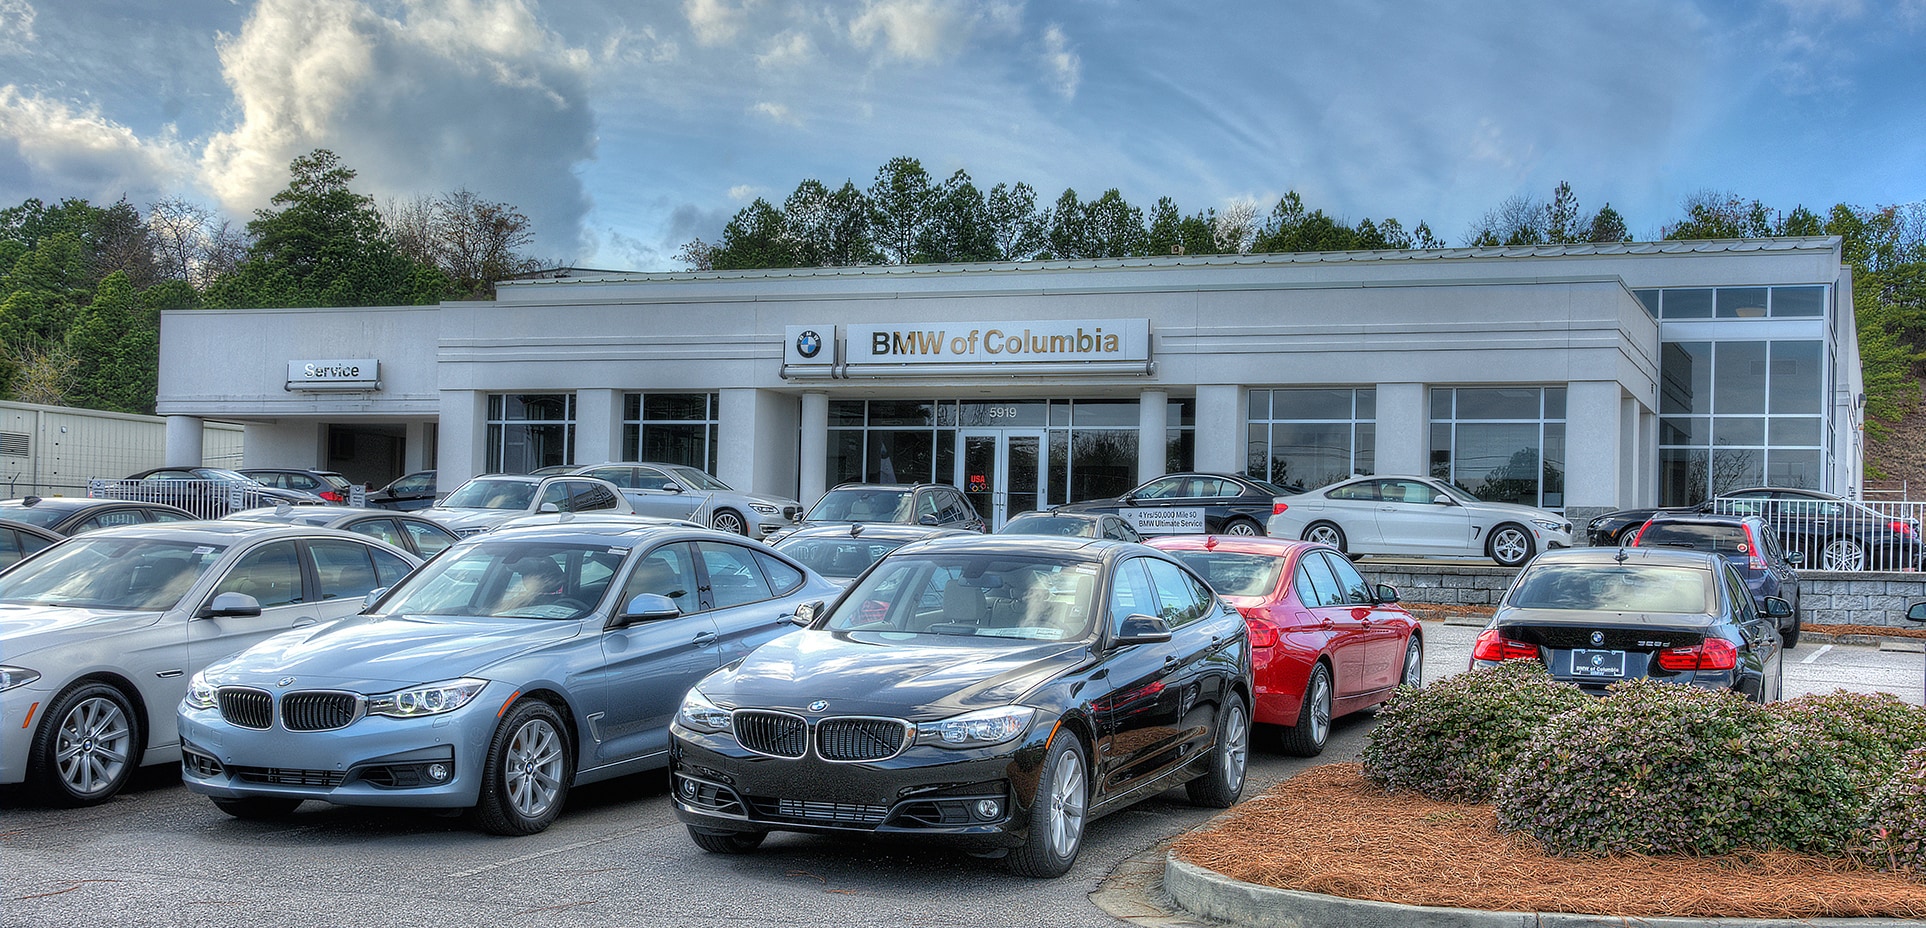 Columbia south carolina bmw dealership #2